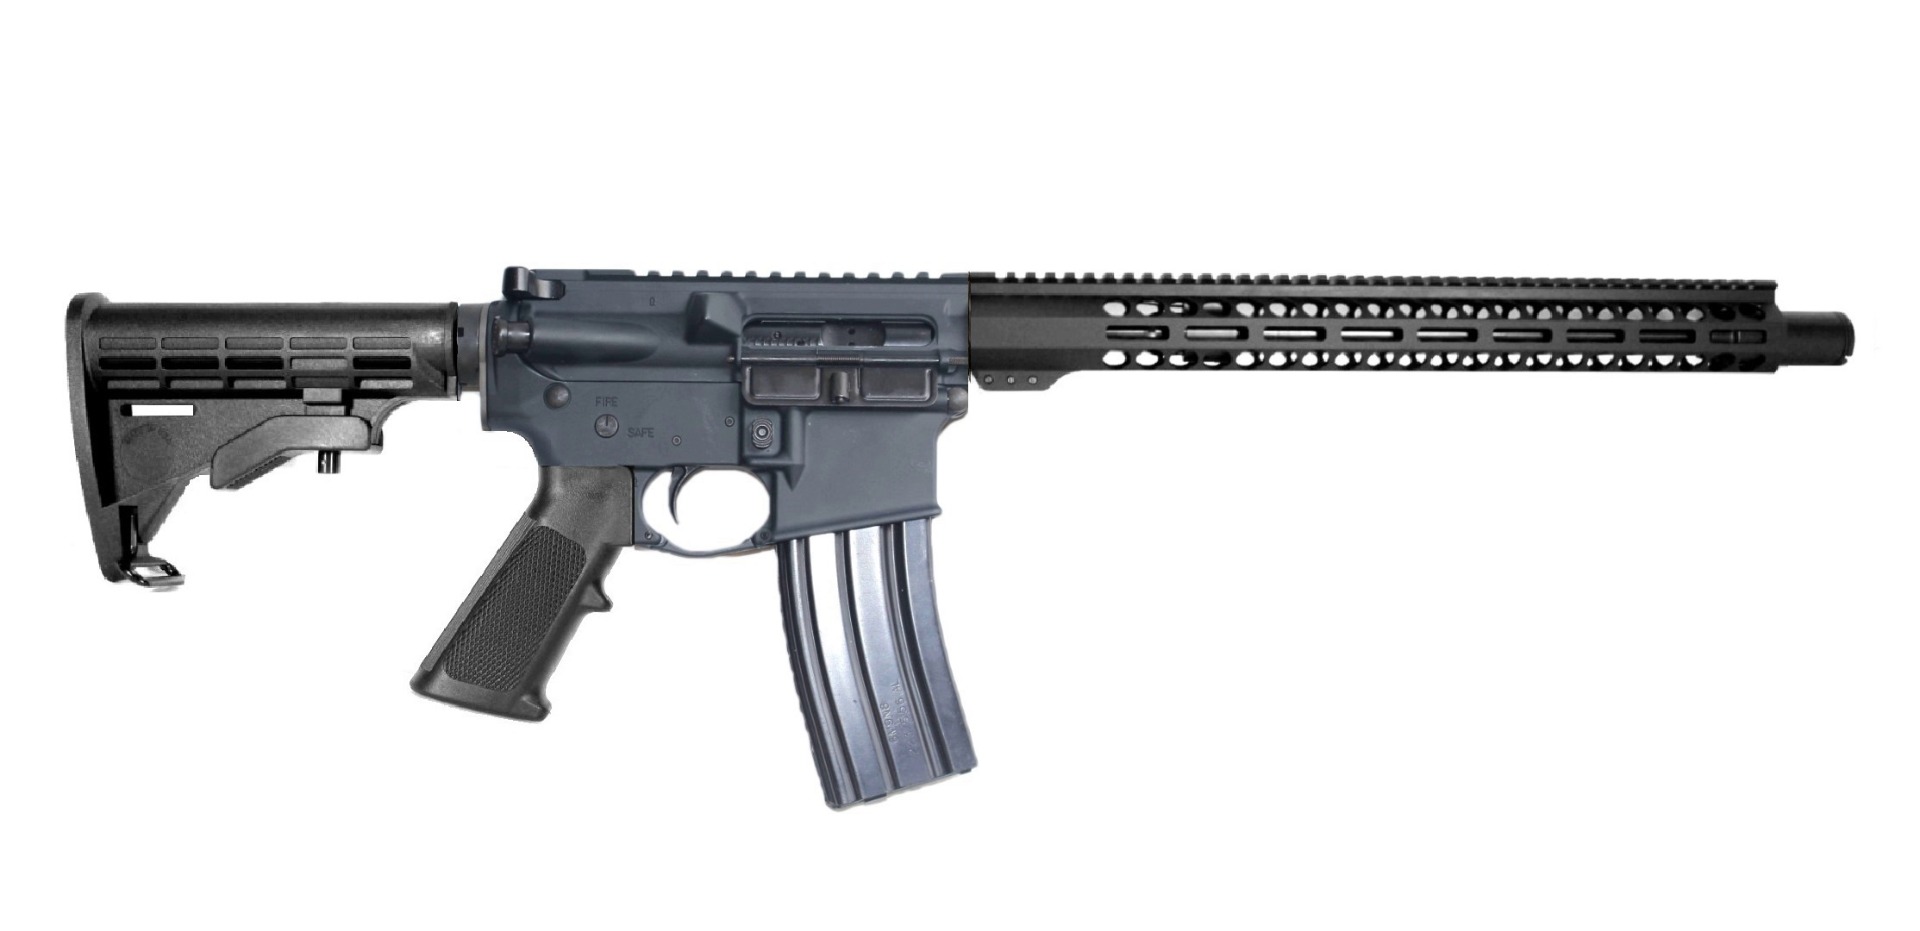 16 inch 300 Blackout AR Rifles | USA MADE